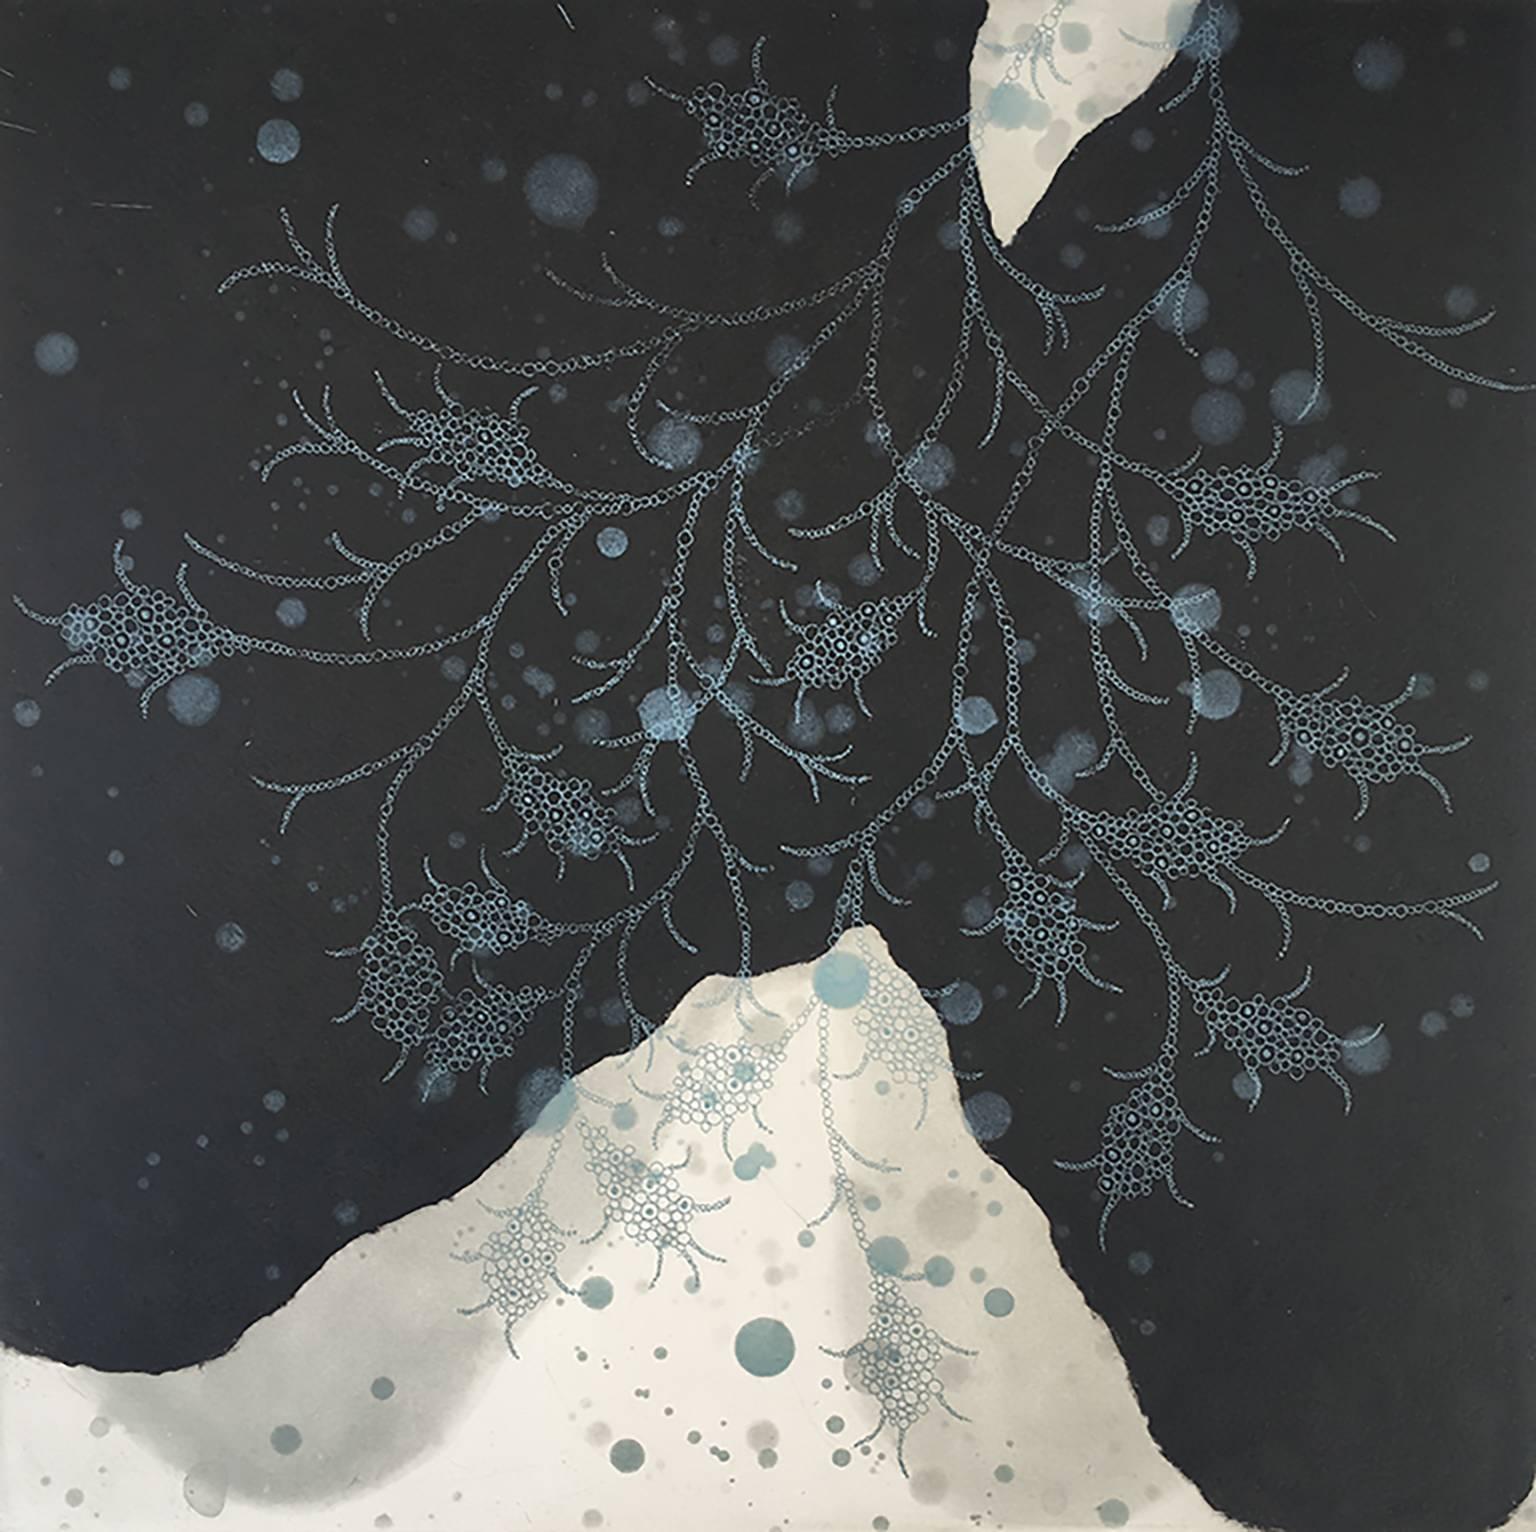 Seiko Tachibana Abstract Print - Fern-24